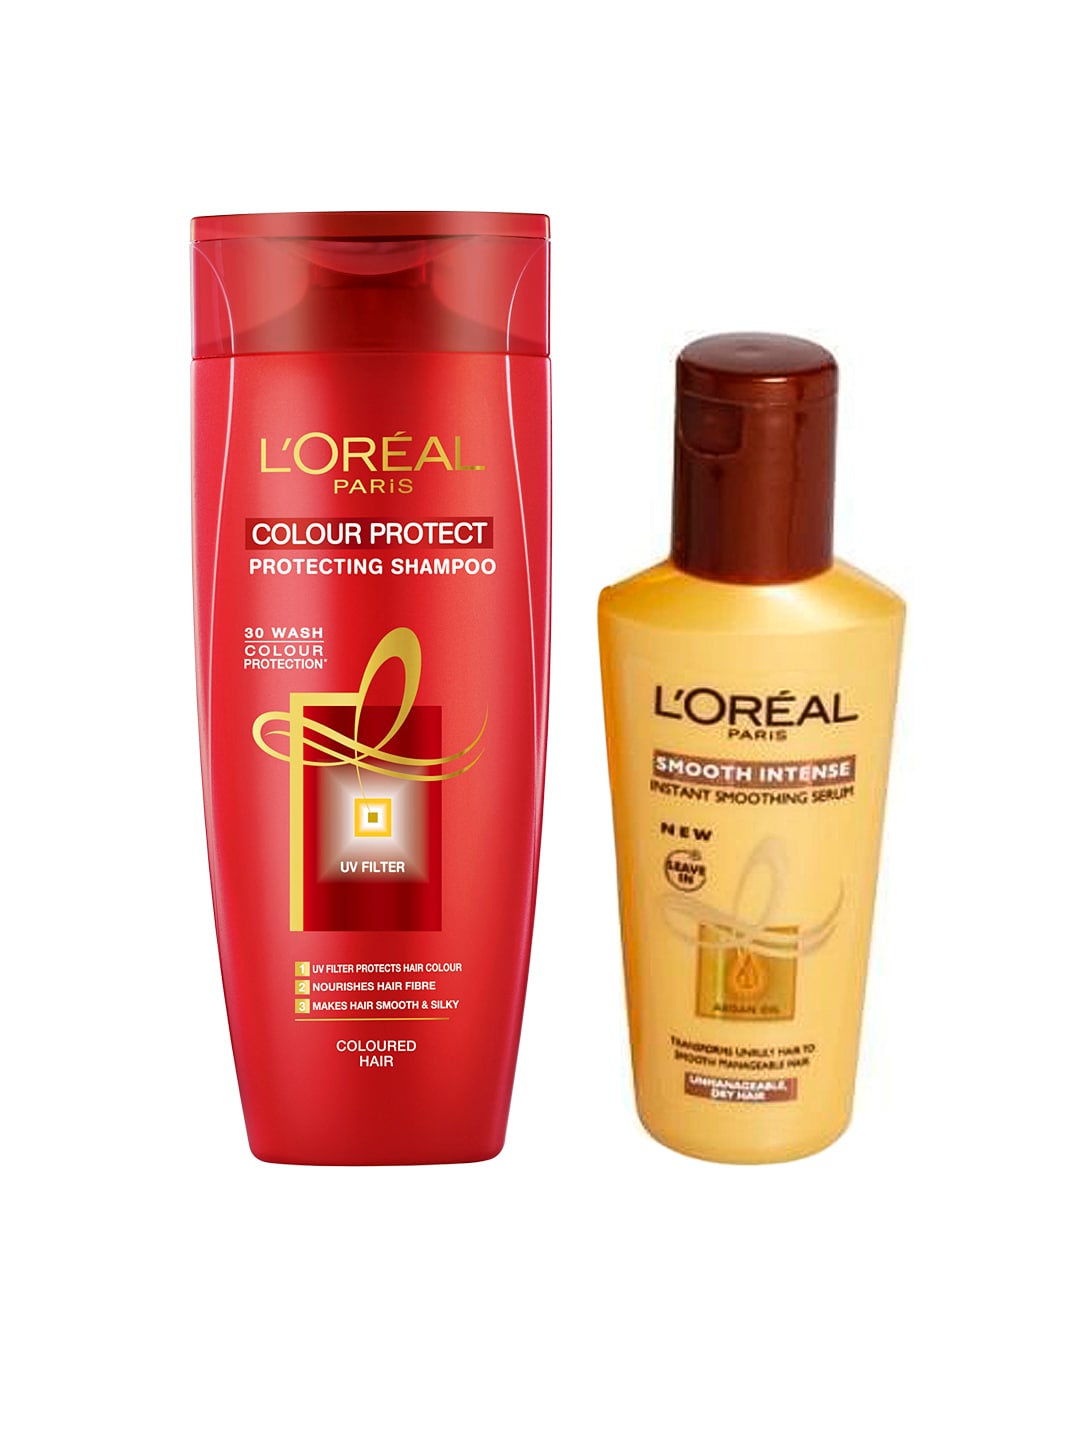 LOreal Paris Smoothing Serum 100ml & LOreal Paris Colour Protect Shampoo 360 ml Price in India